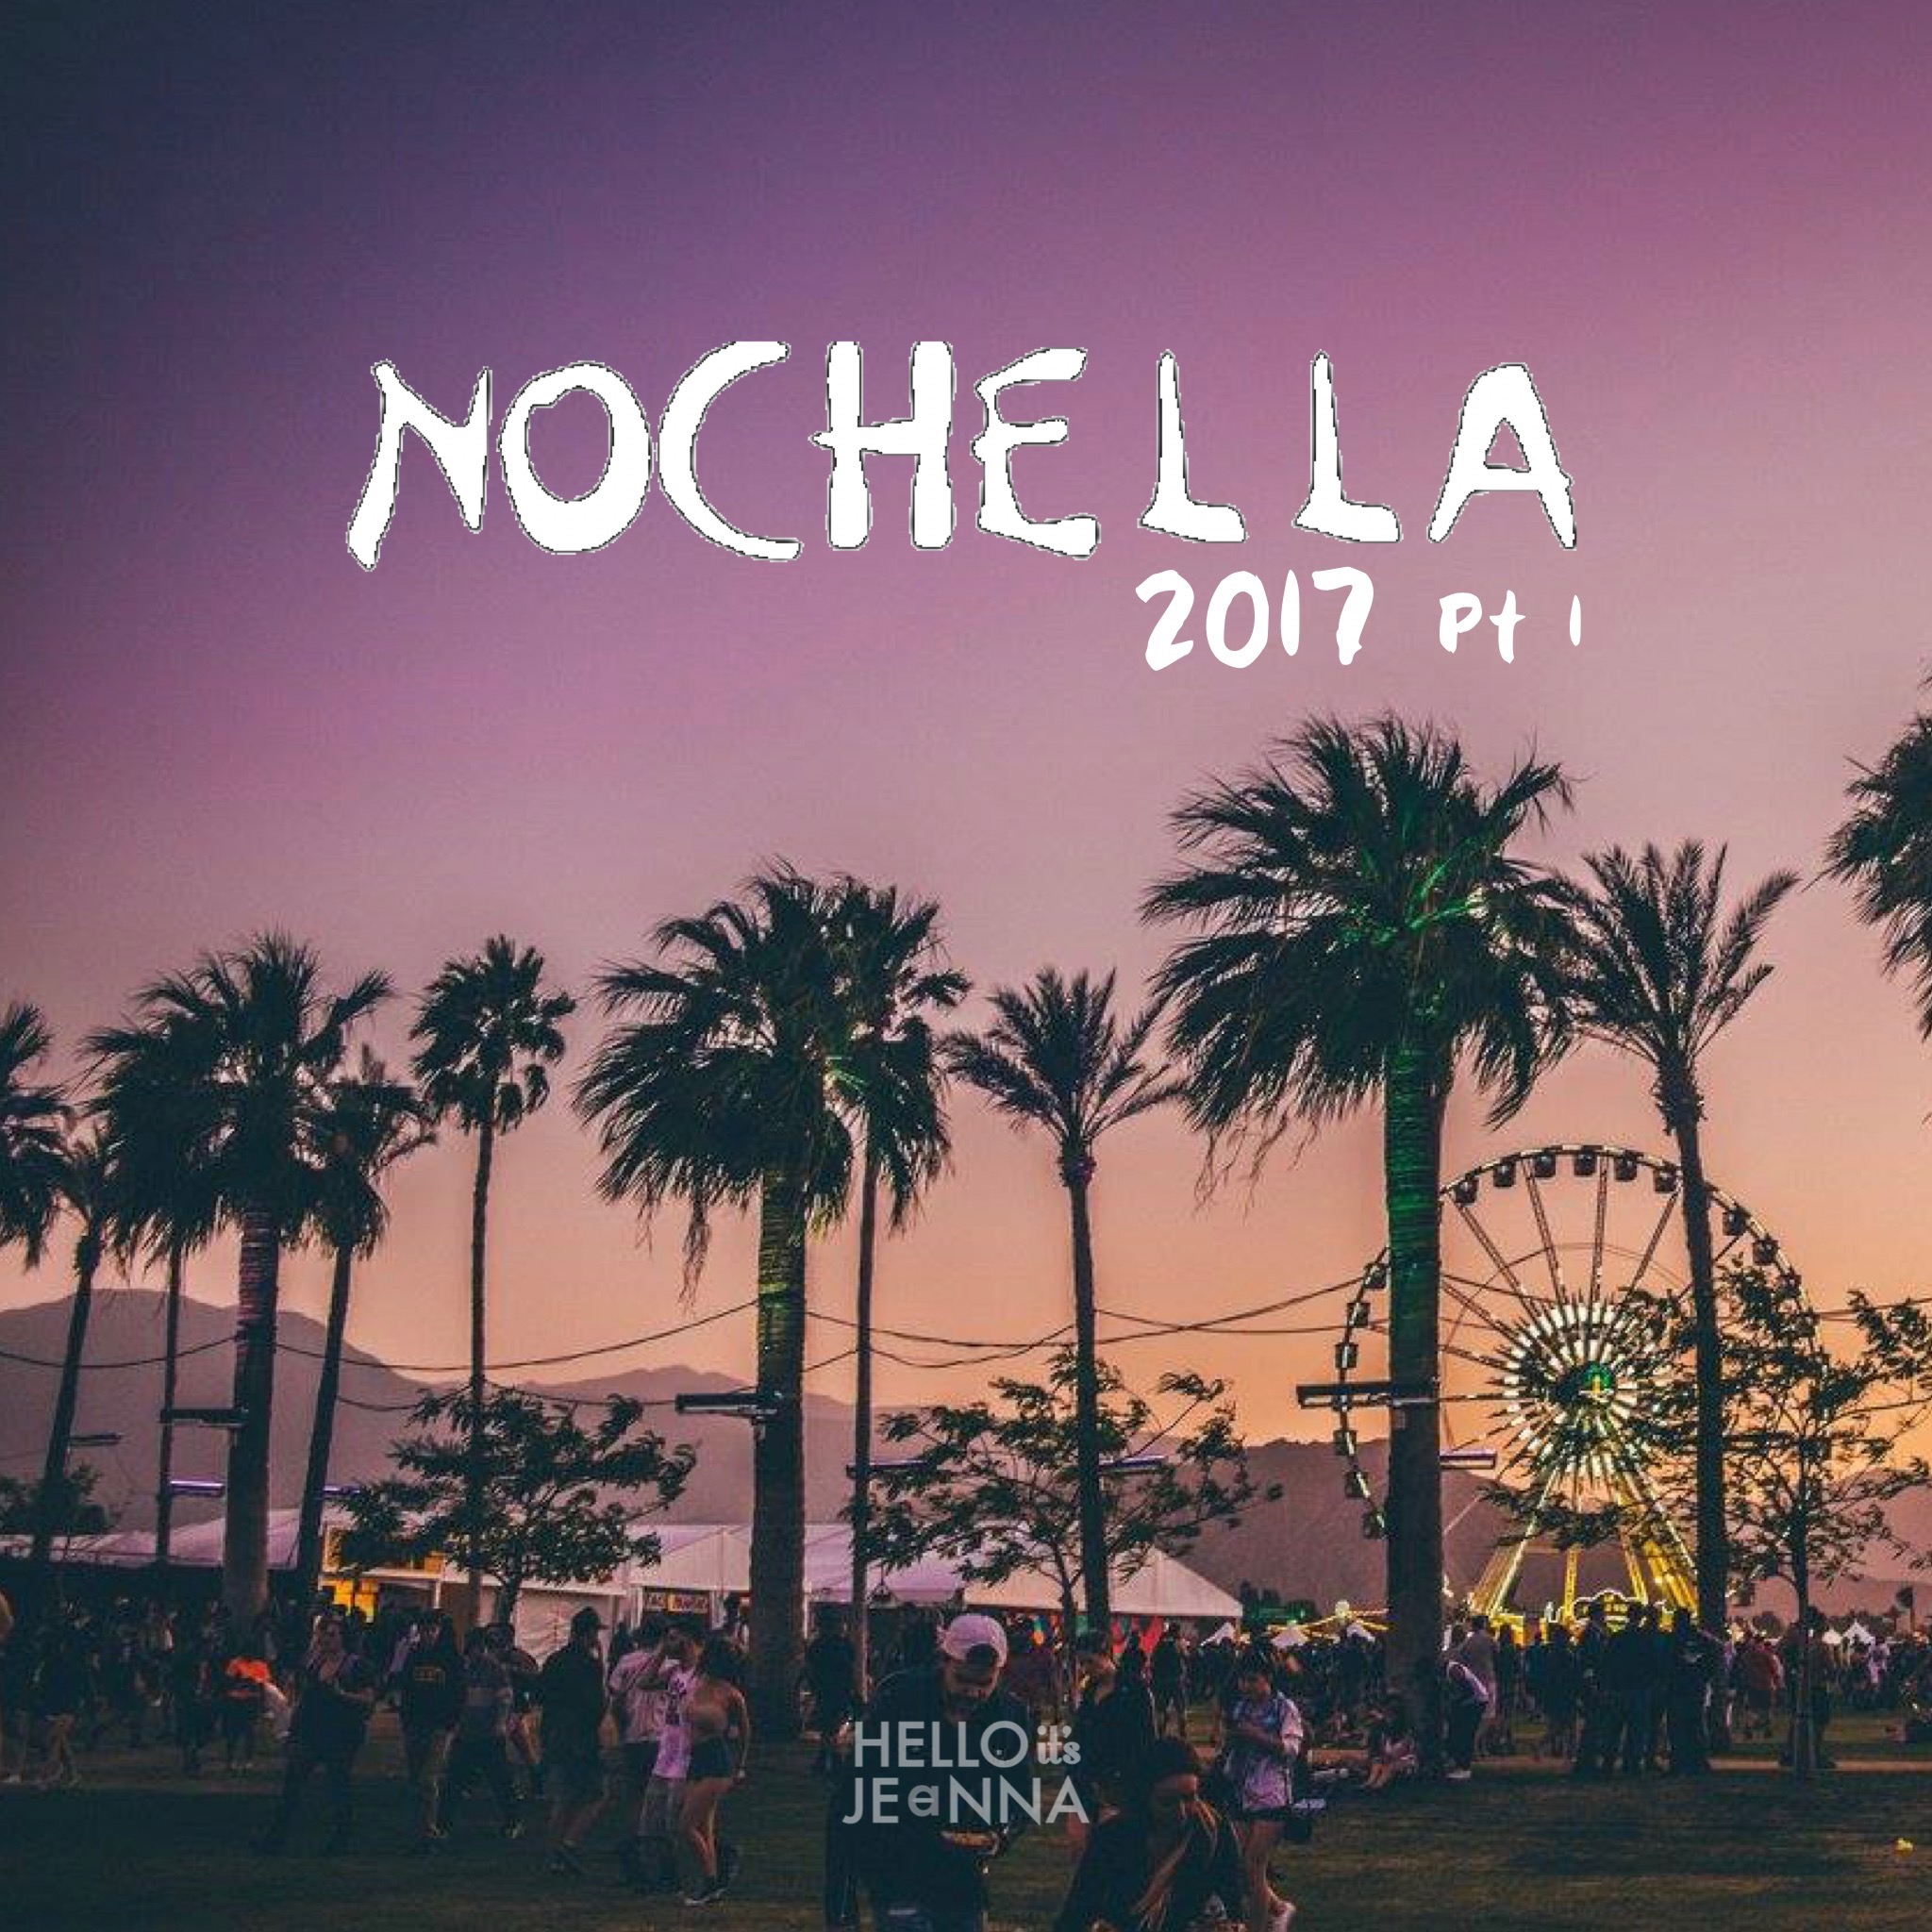 nochella 2017 part 1 cover.JPG